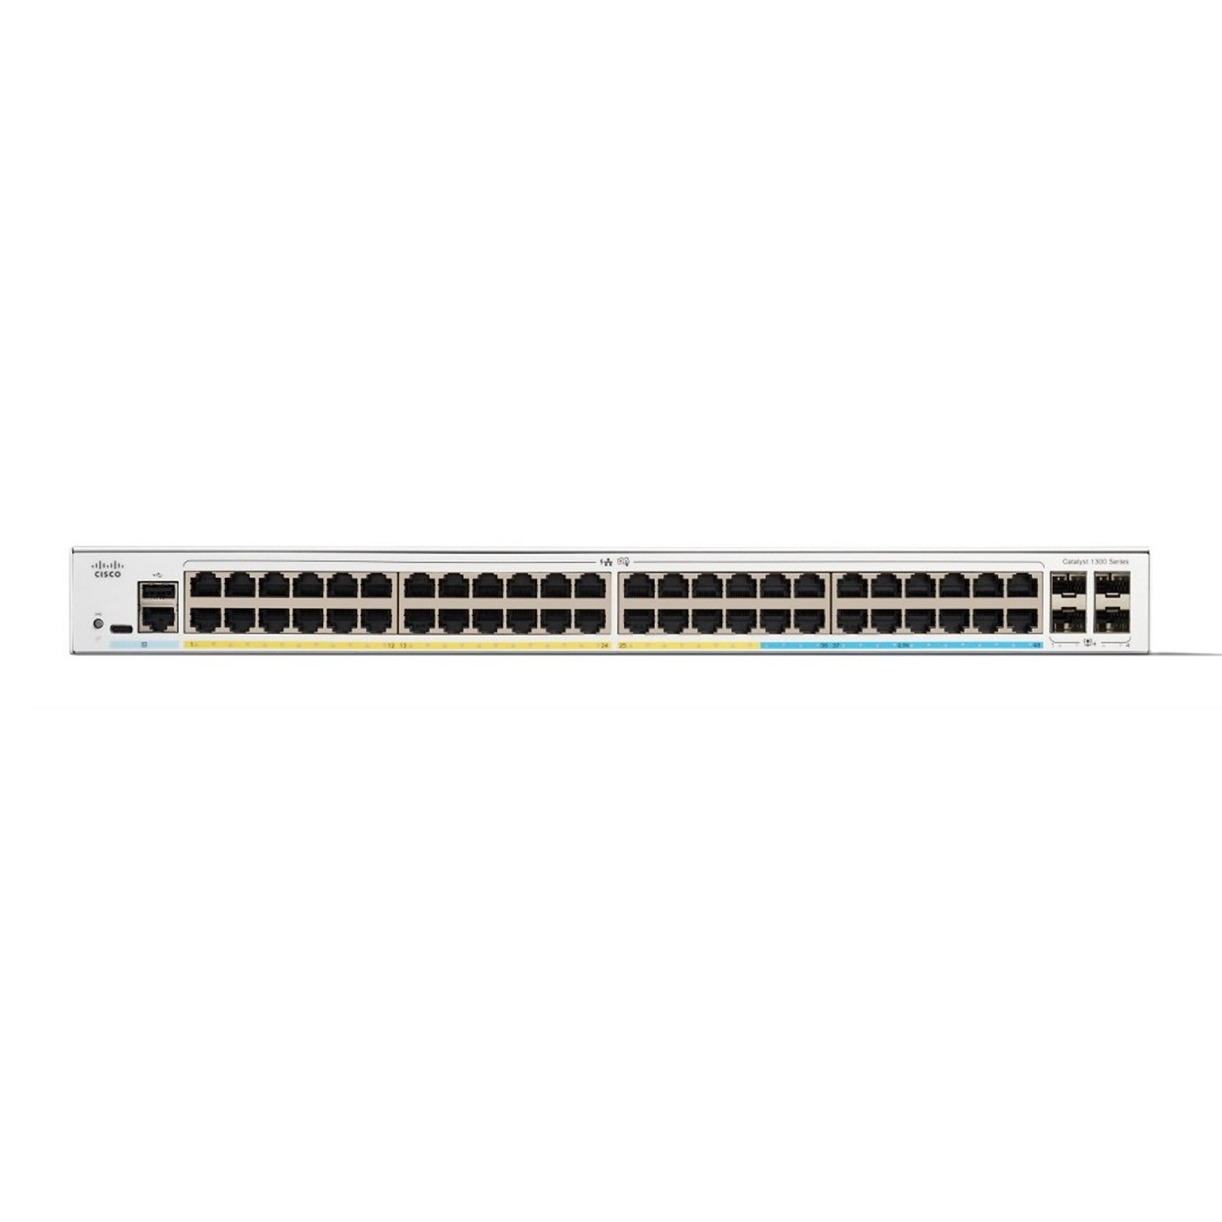 Cisco catalyst C1300-48P, 48 ports gigabit POE+ 370W + 4 x 1G SFP uplink ports switch